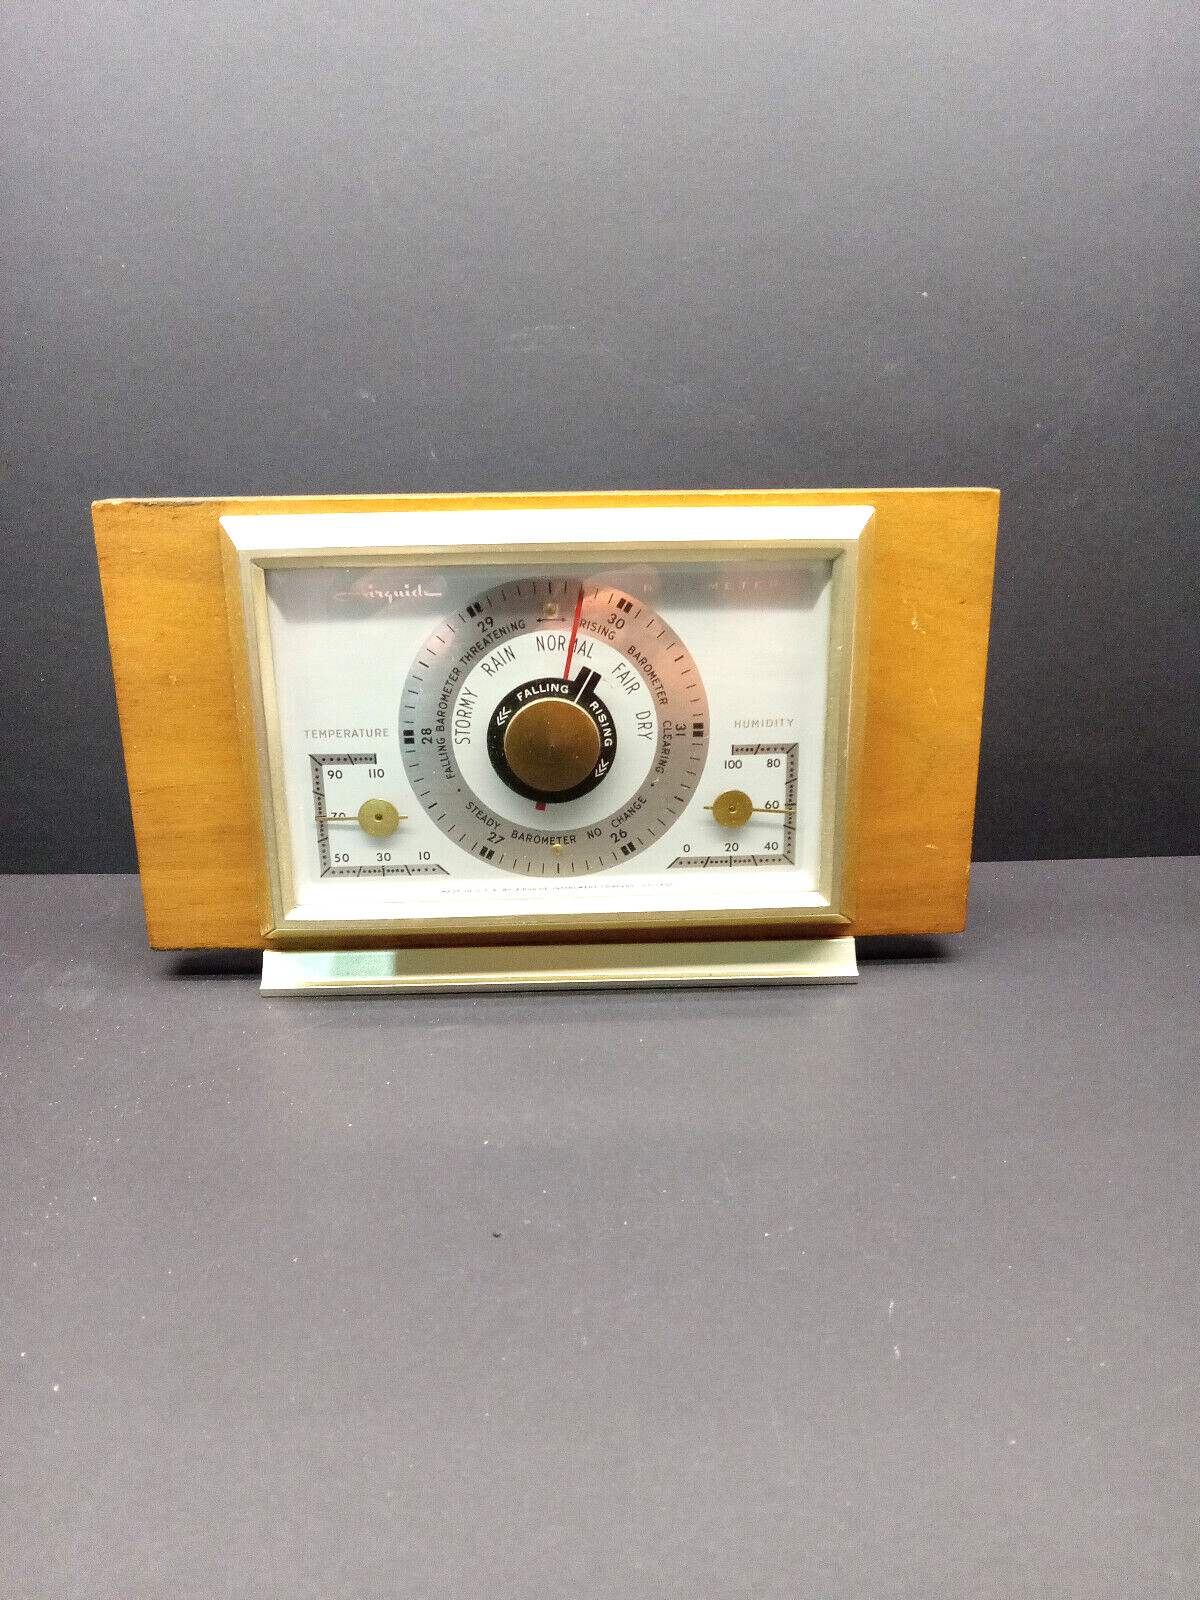 Vintage Airguide Barometer, Temperature, Humidity Desktop Weather Station